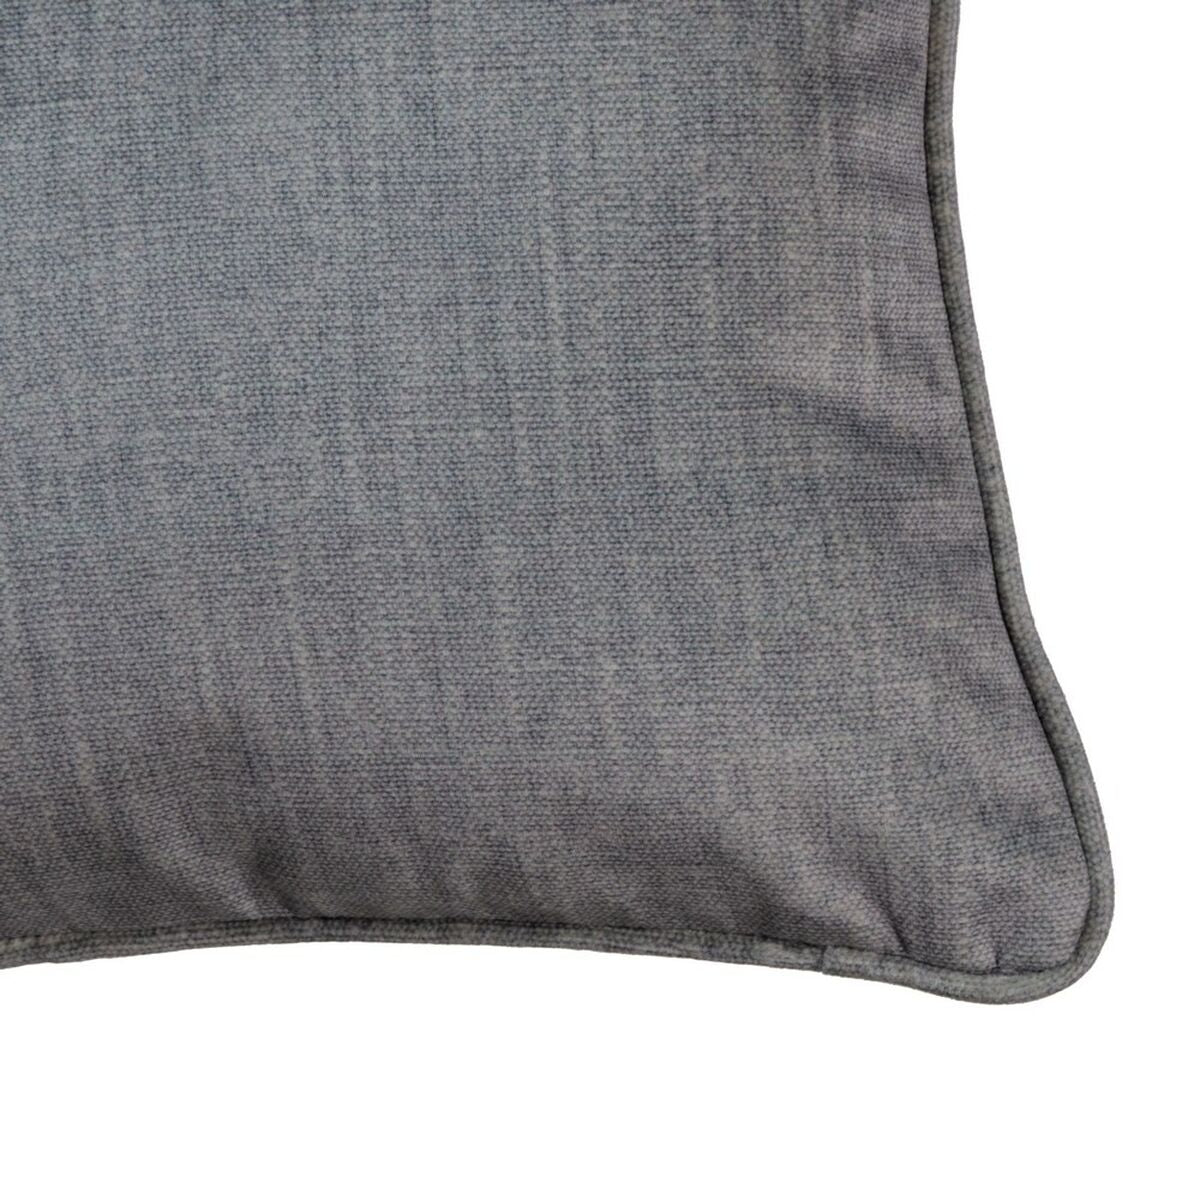 Gray cushion 45 x 30 cm